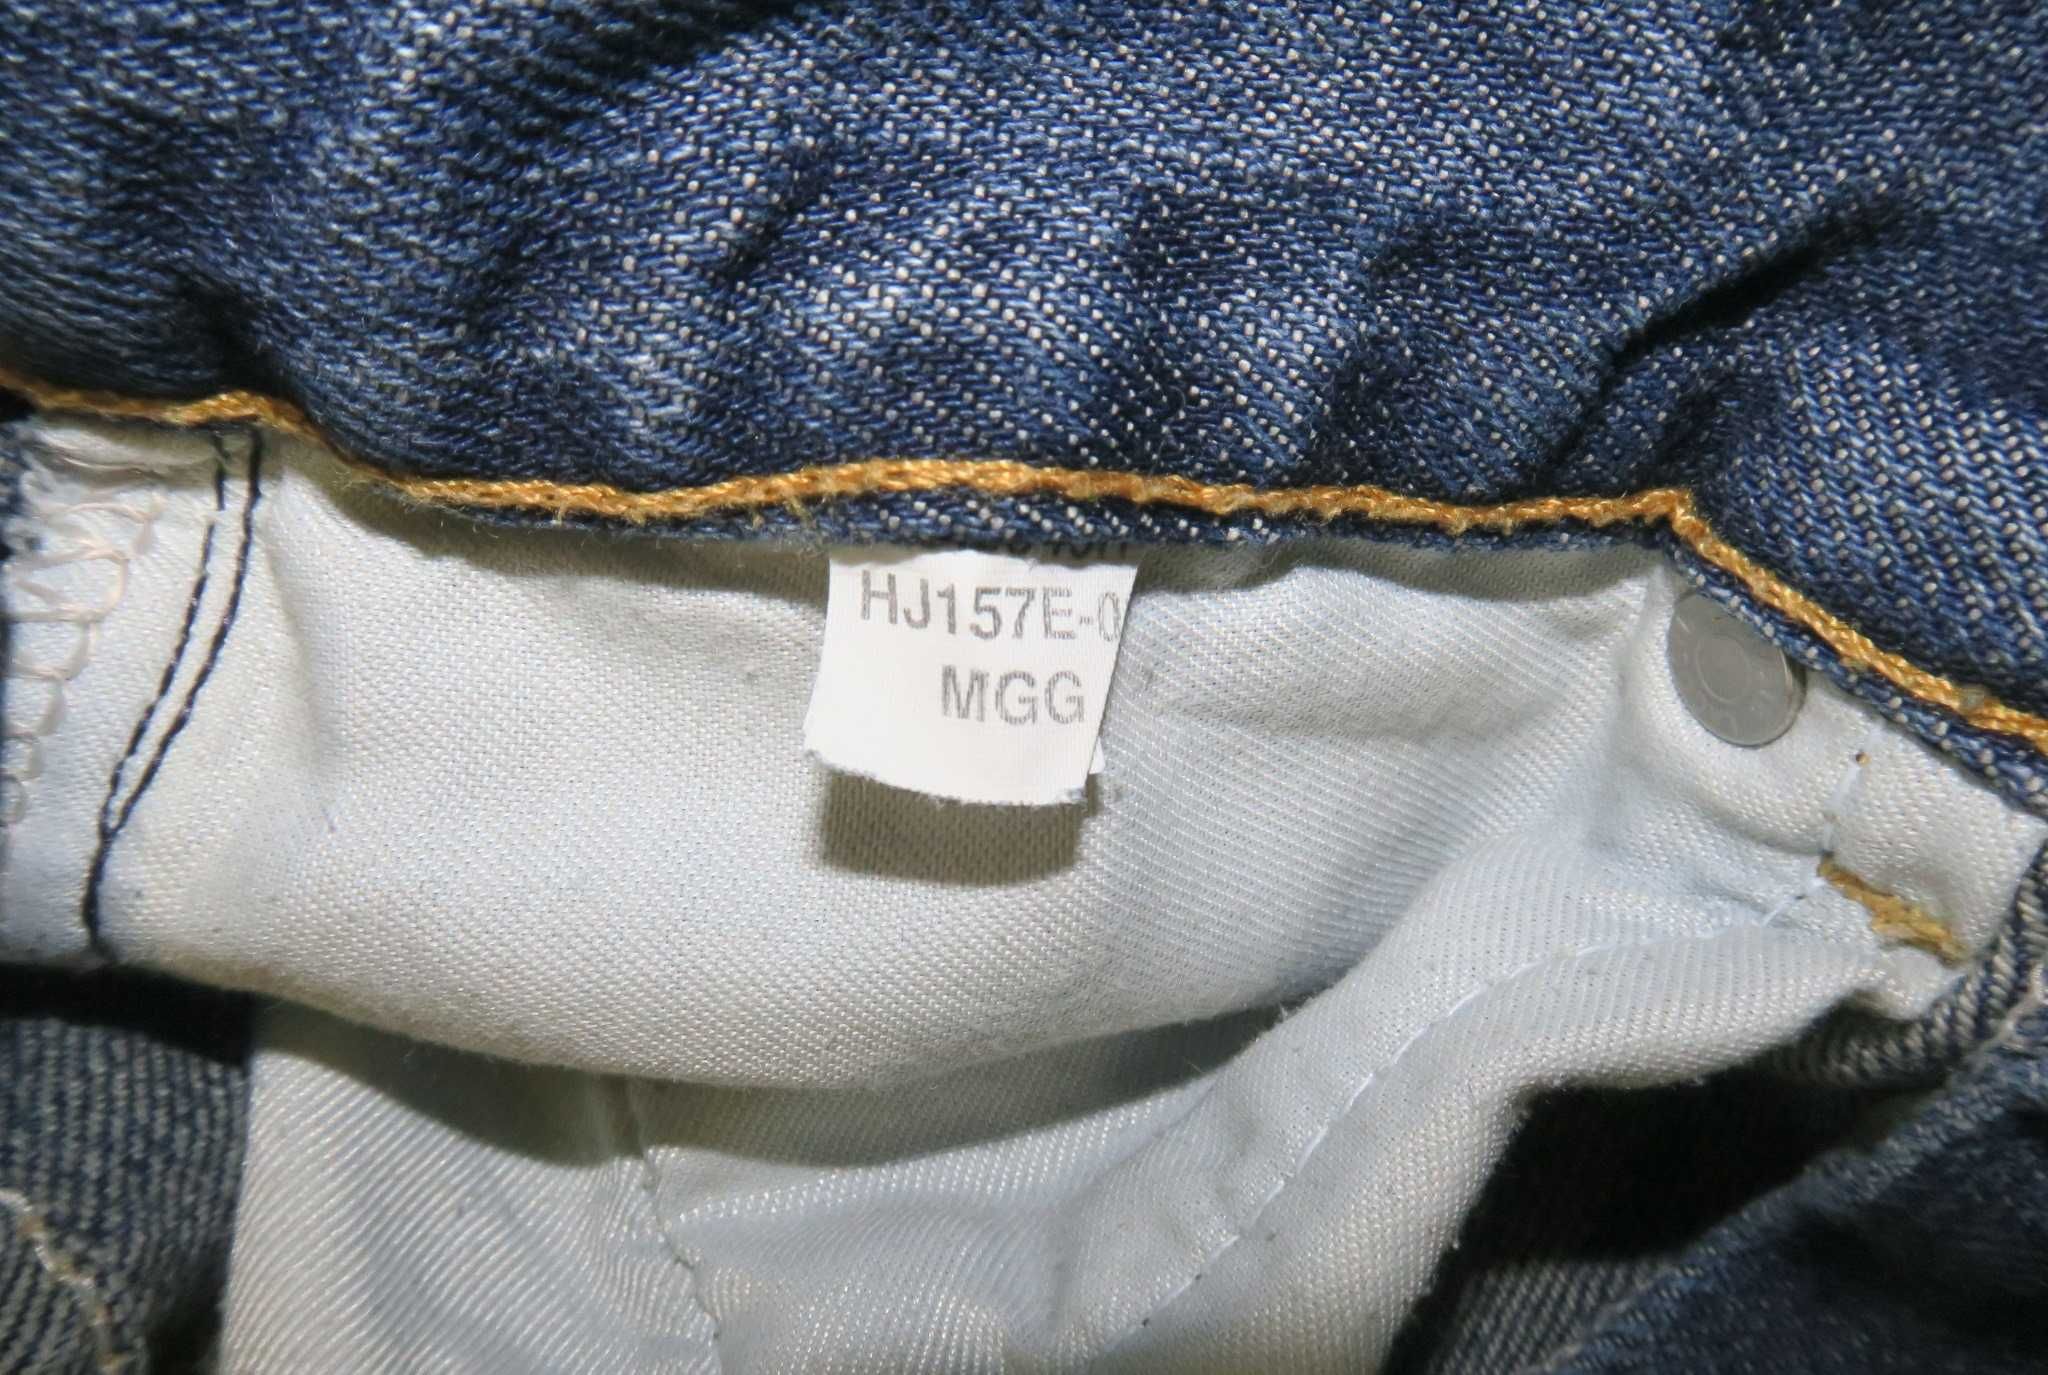 Lacoste spodnie jeansowe vintage 10 lat